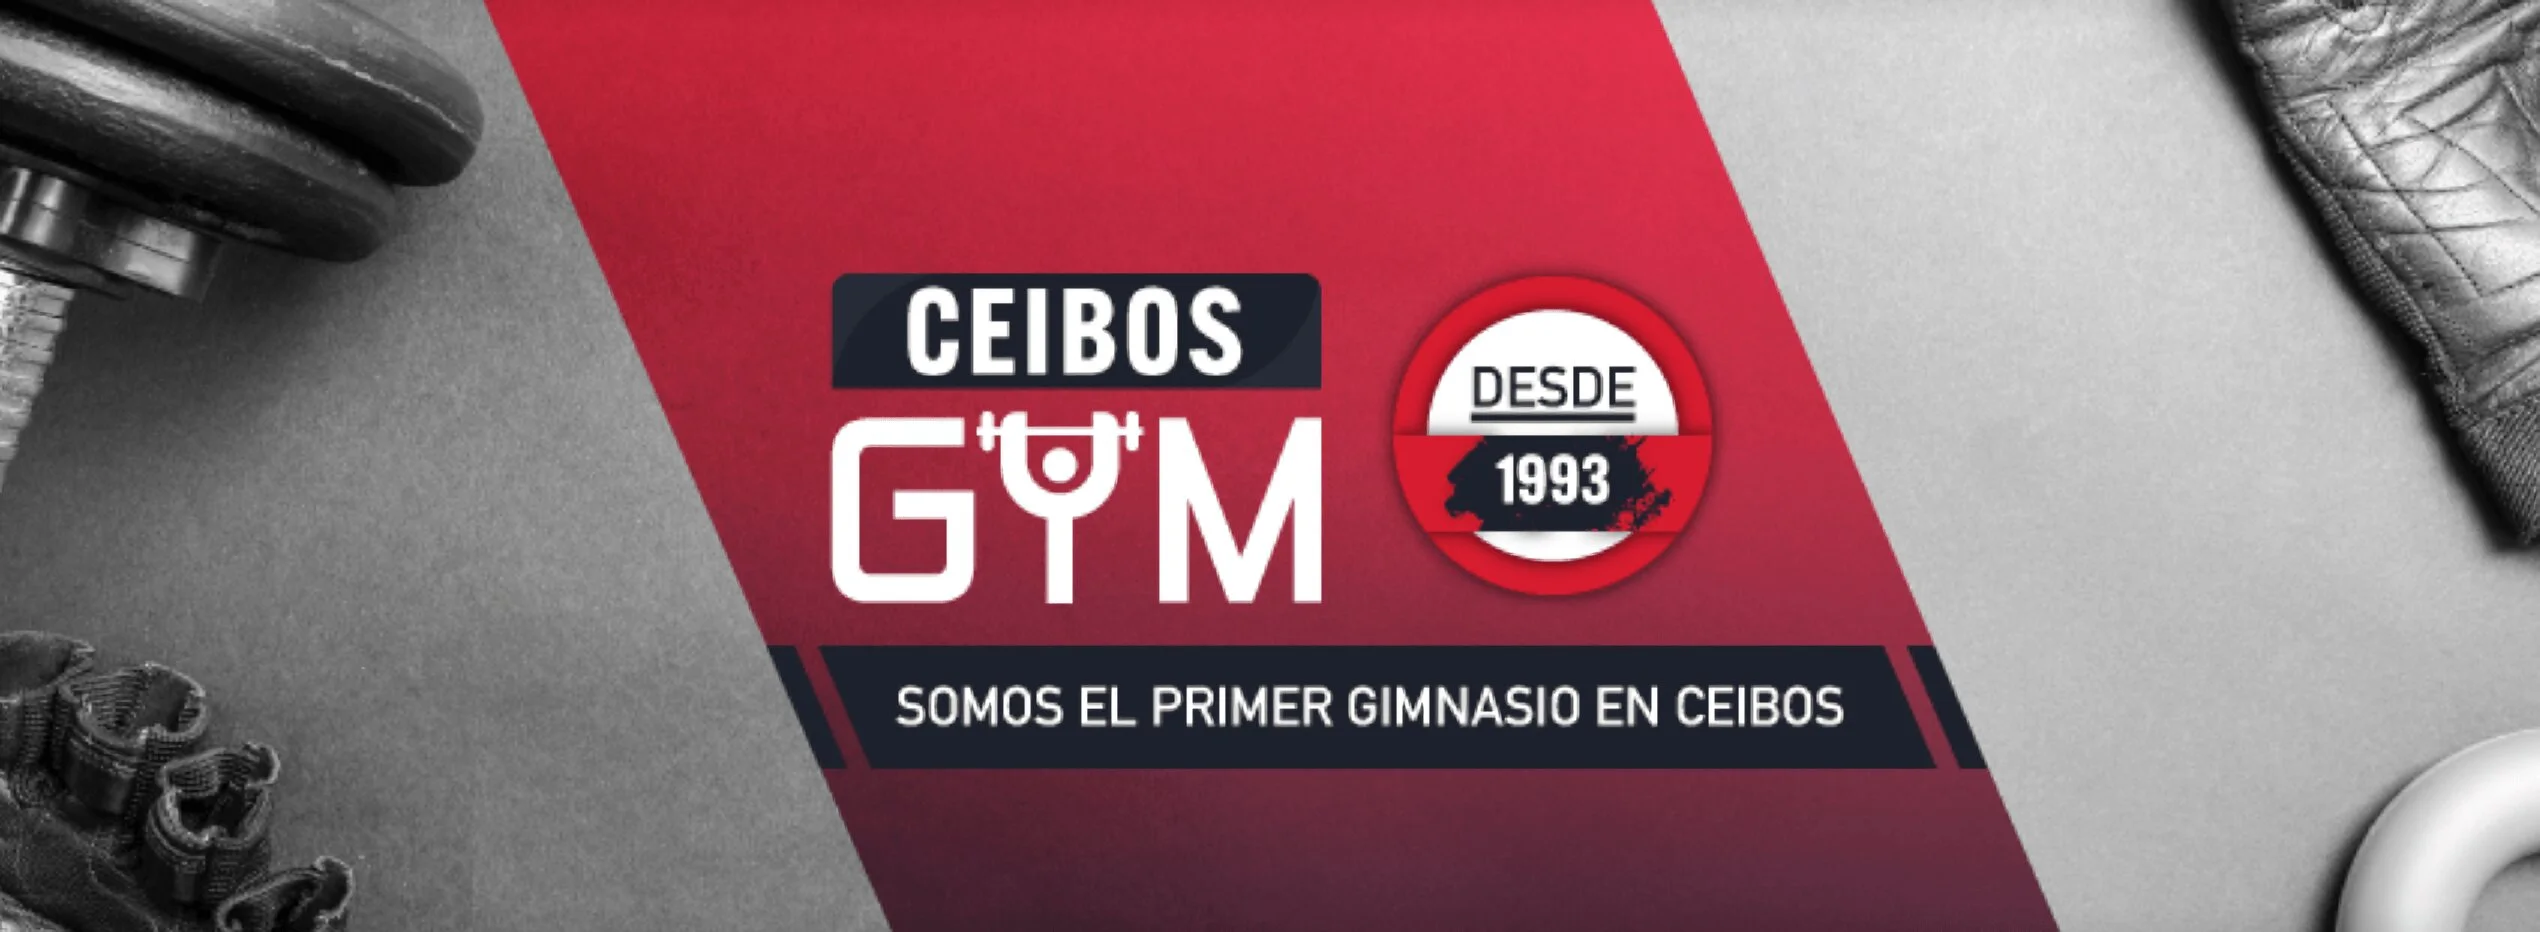 Ceibos Gym-816